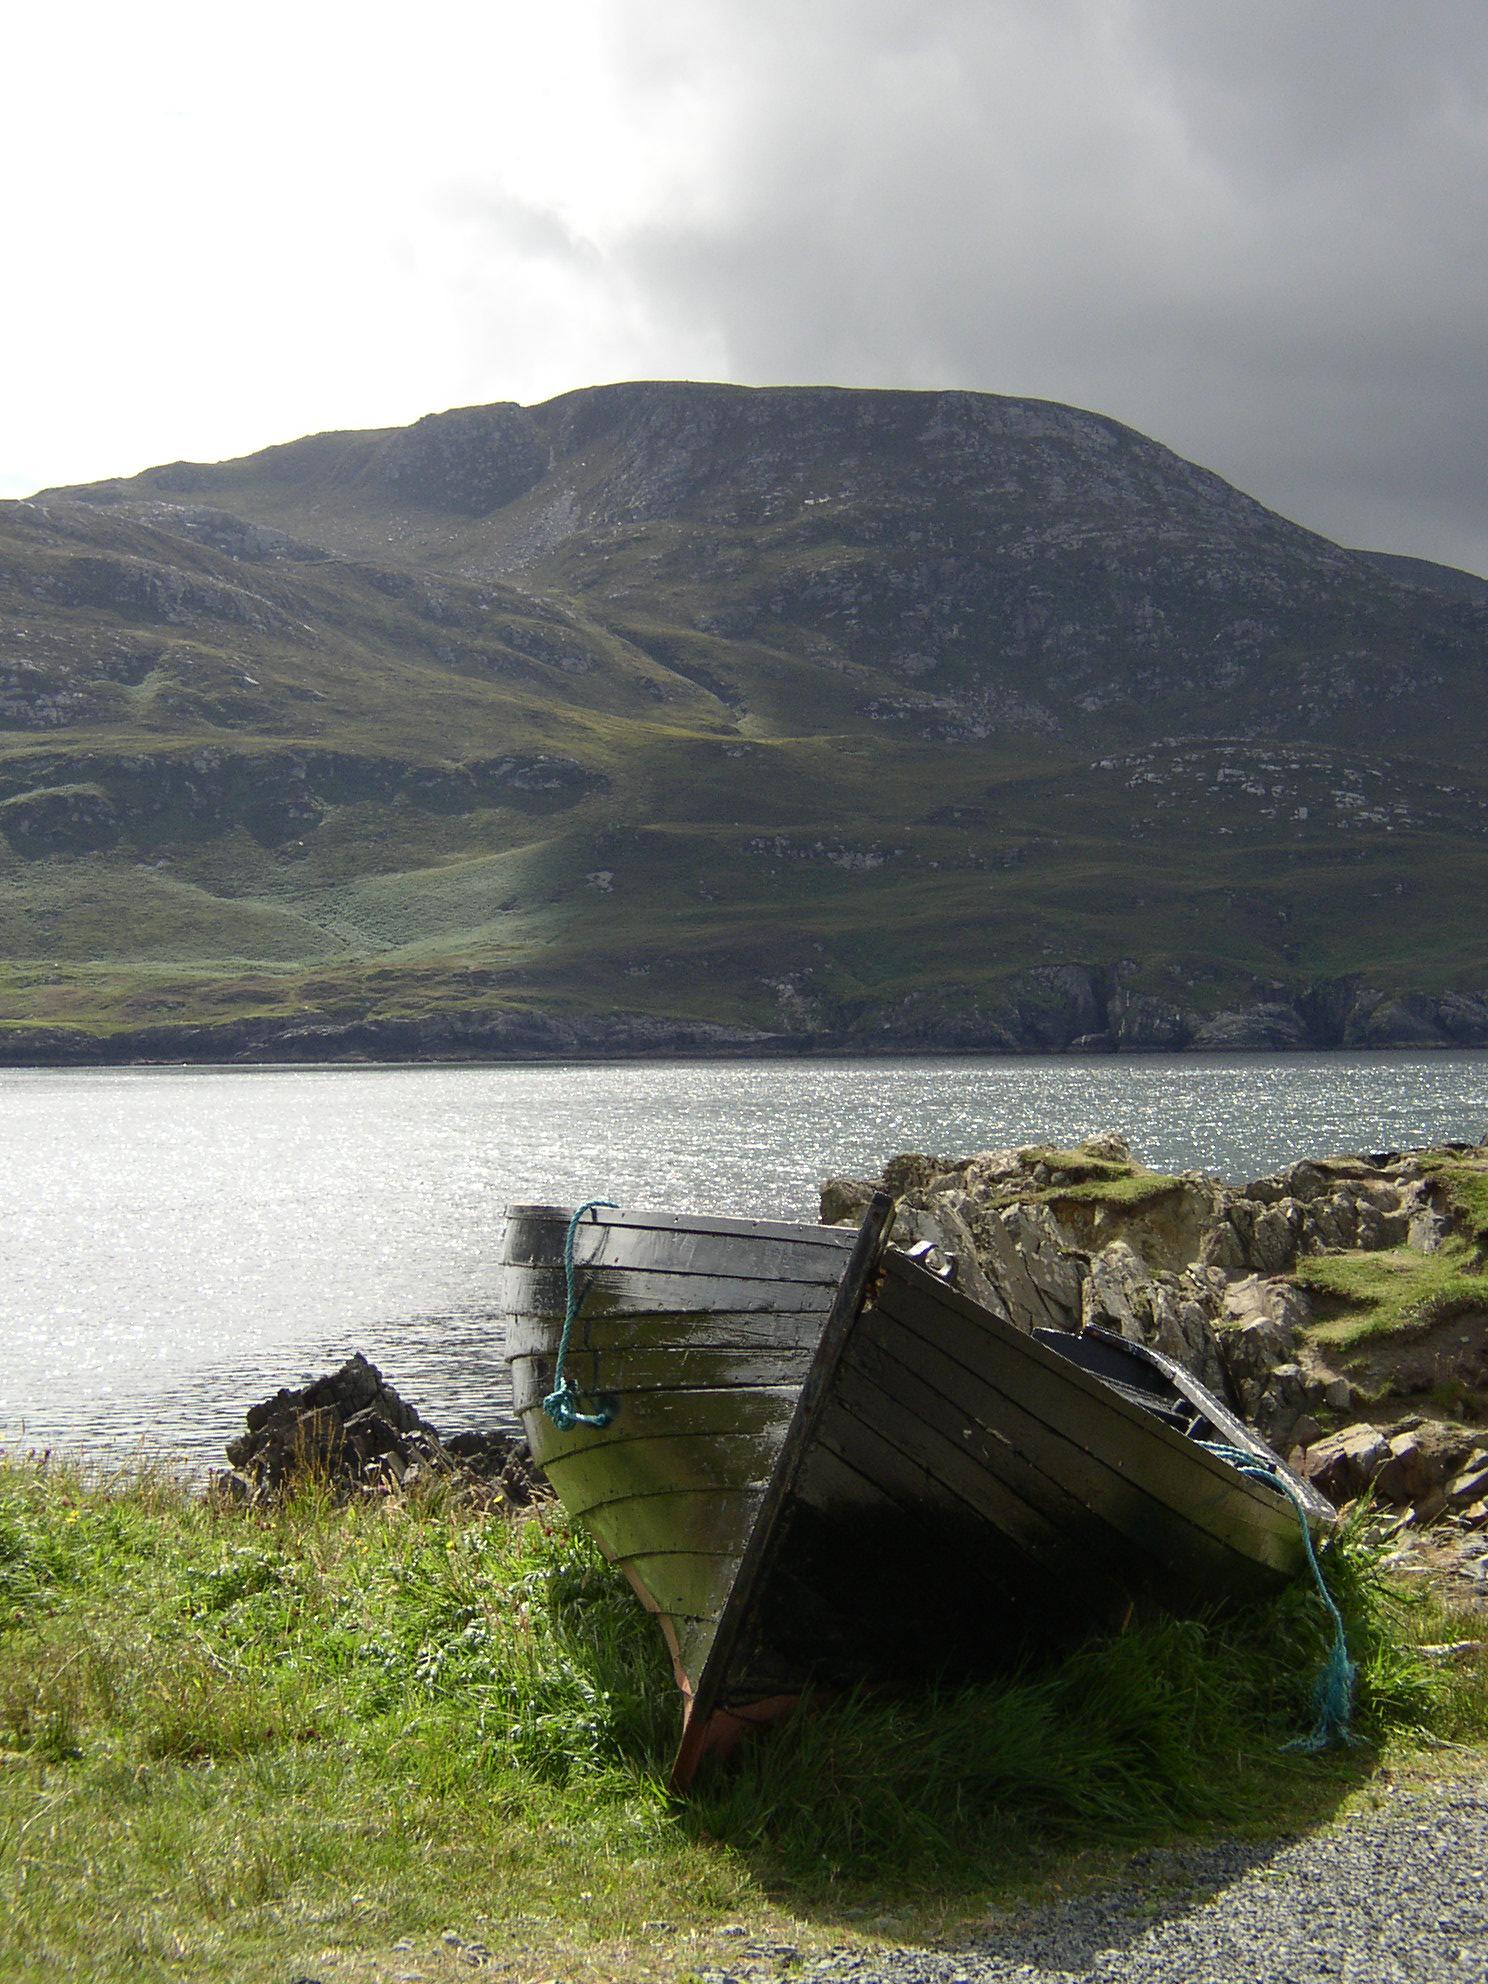 Irsko
Opuštěná loďka v údolí Gleancolumkille